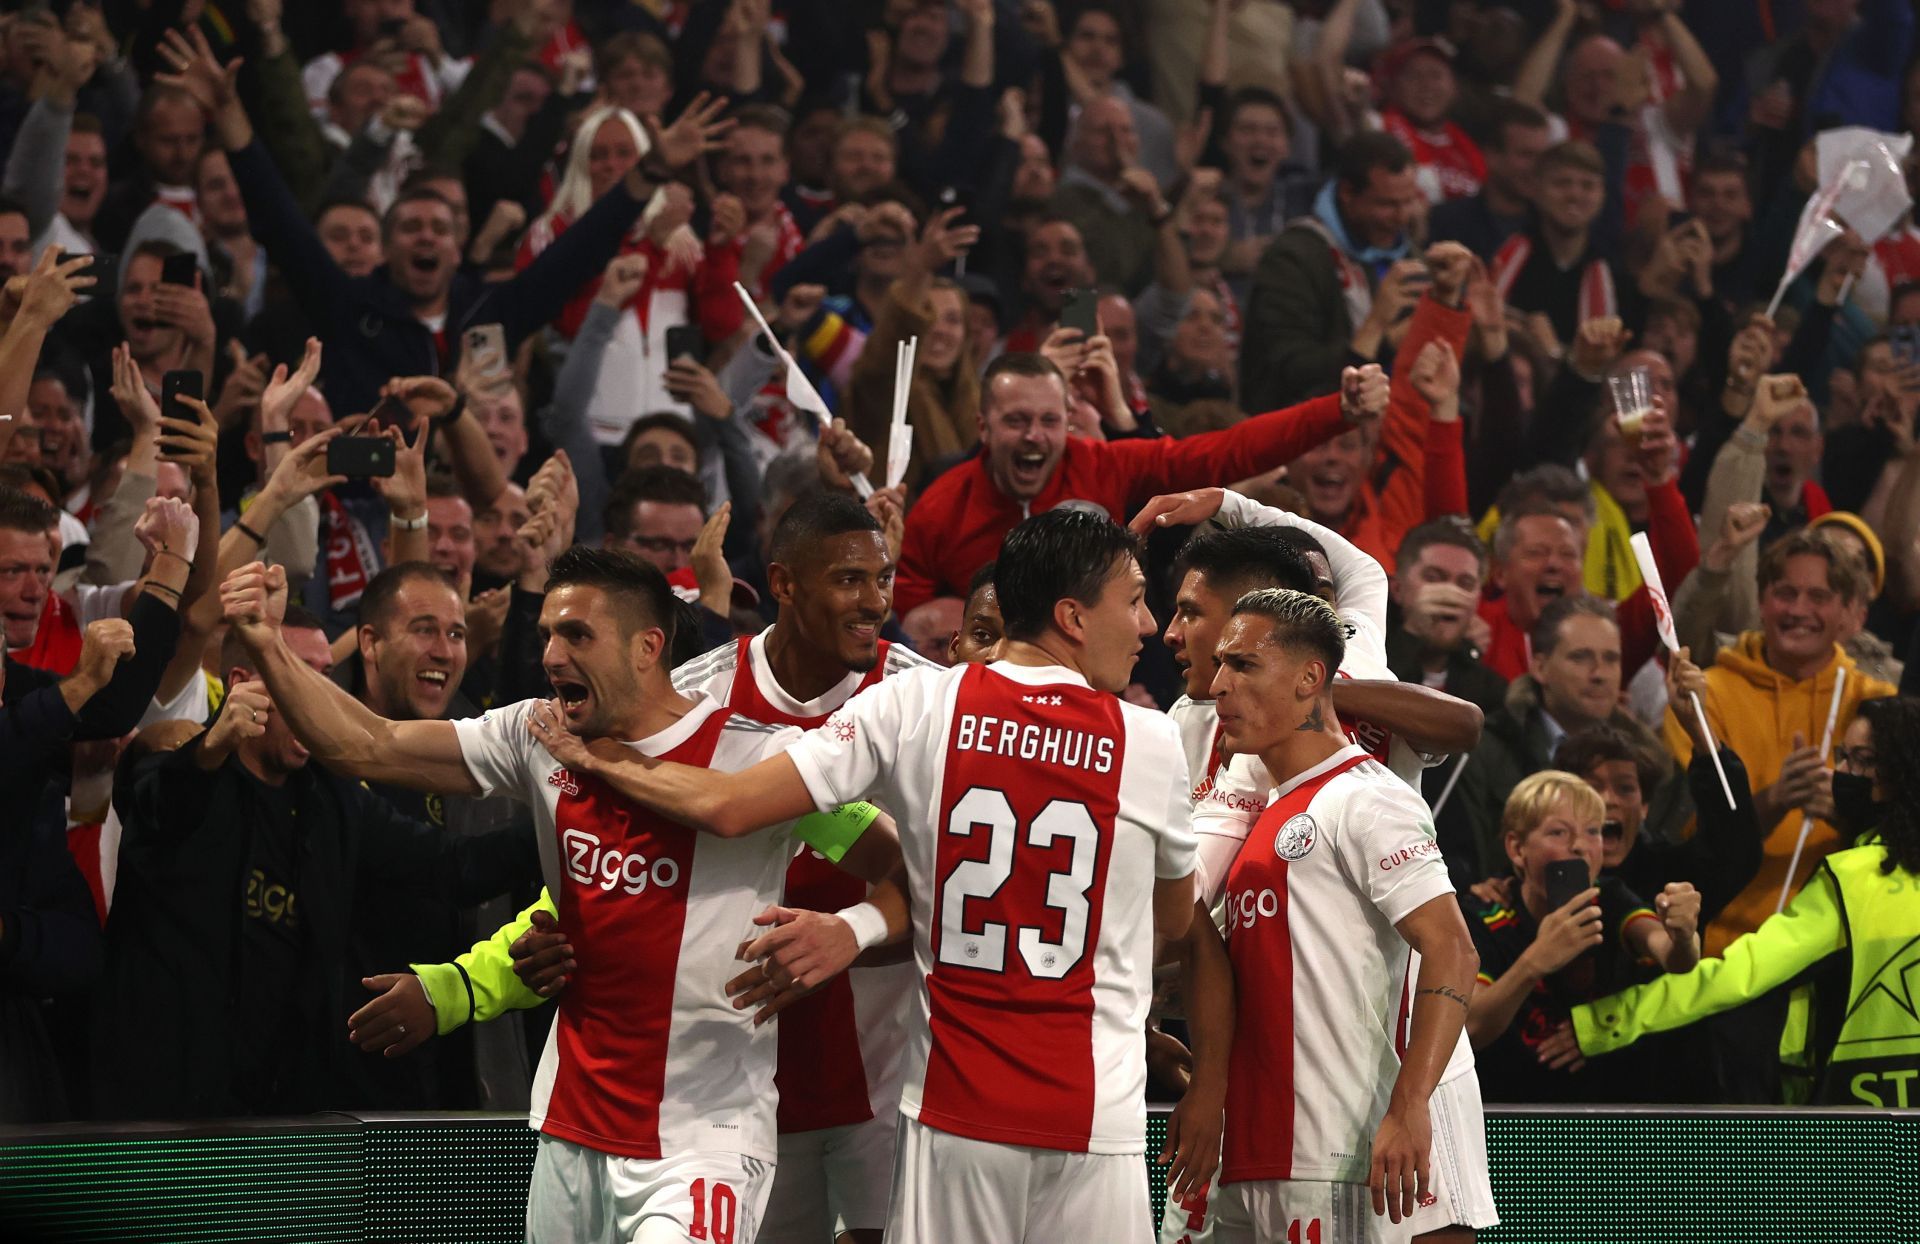 AFC Ajax will host RKC Waalwijk on Sunday